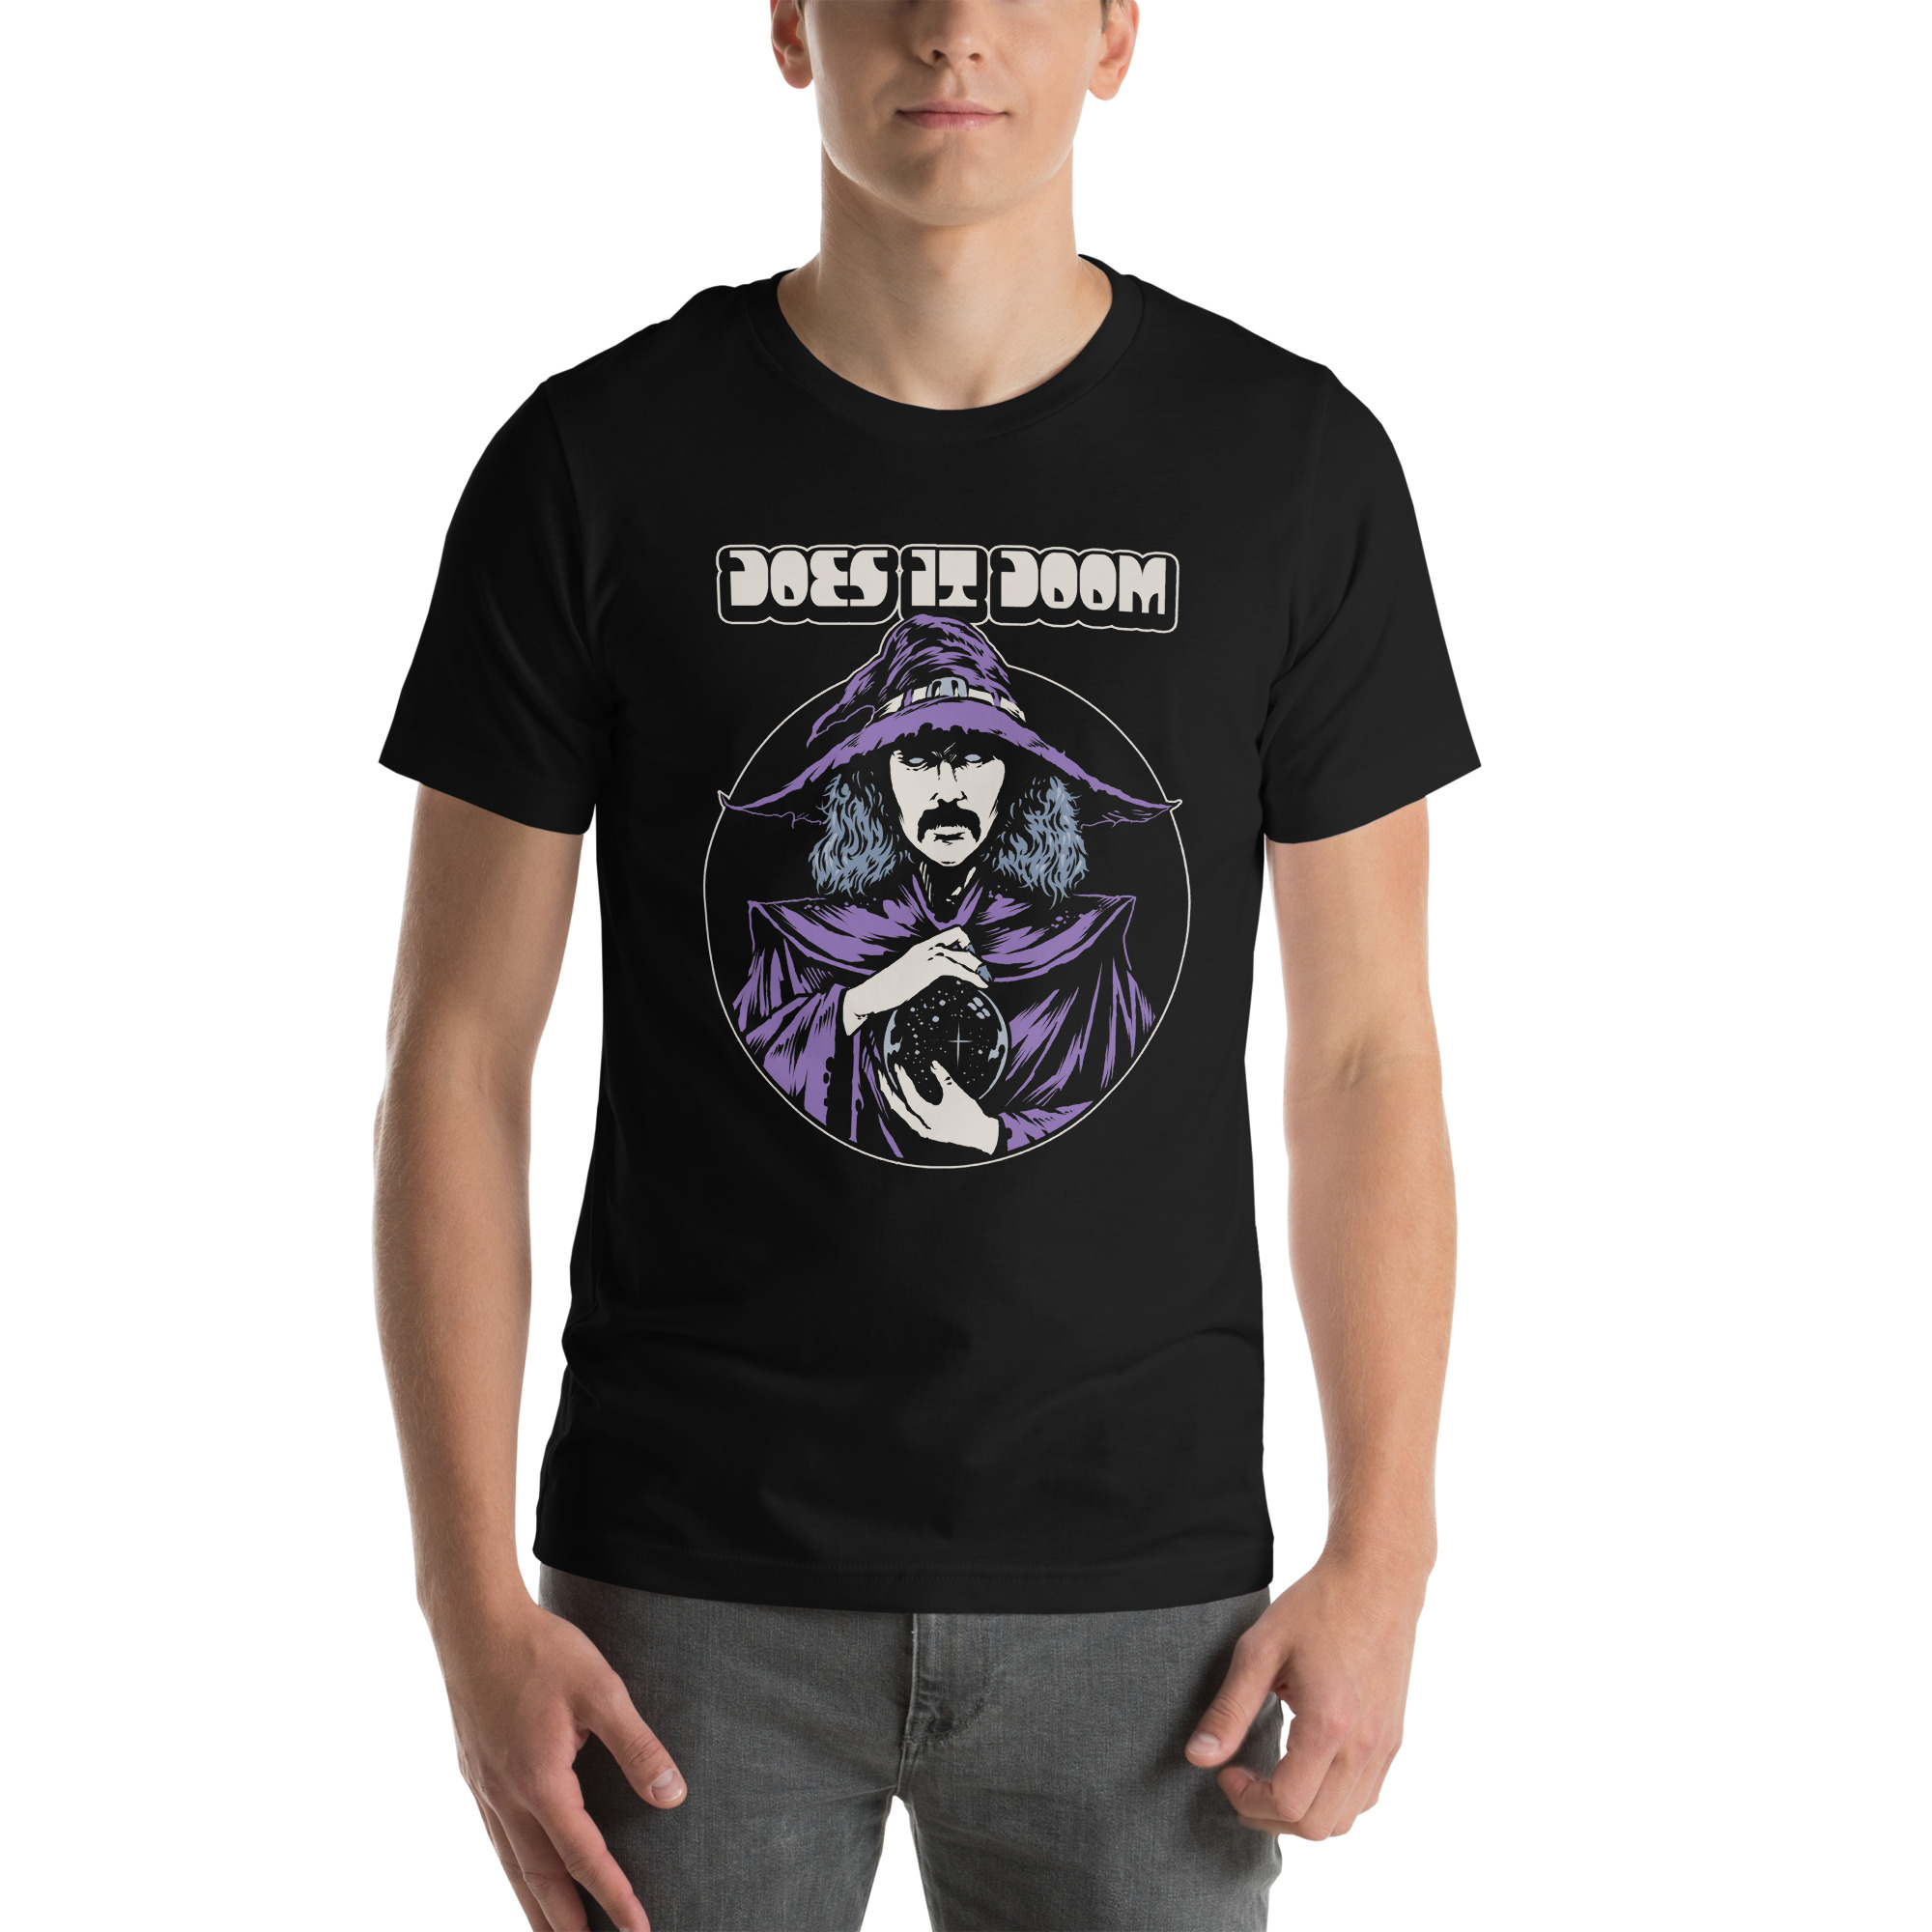 Riff Wizard T-Shirt - Does It Doom?